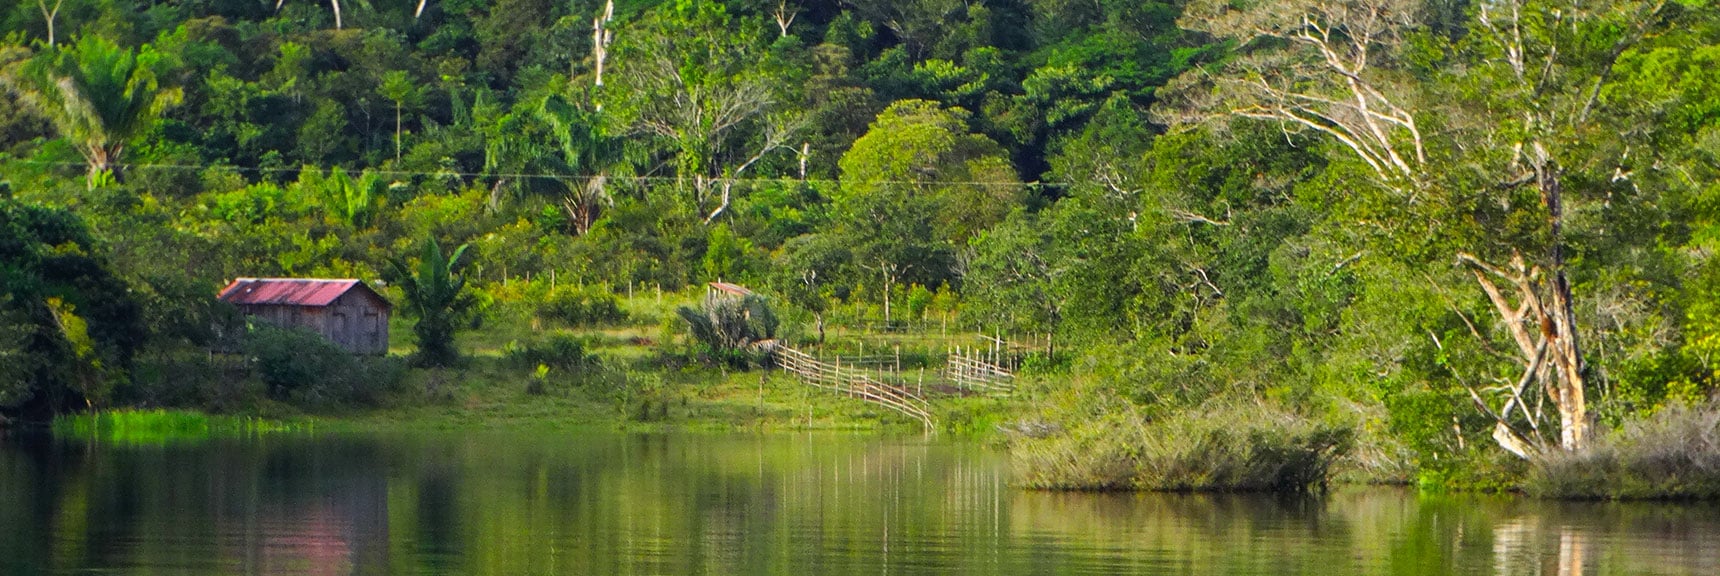 Amazonas Brazil Ecotourism Discounts